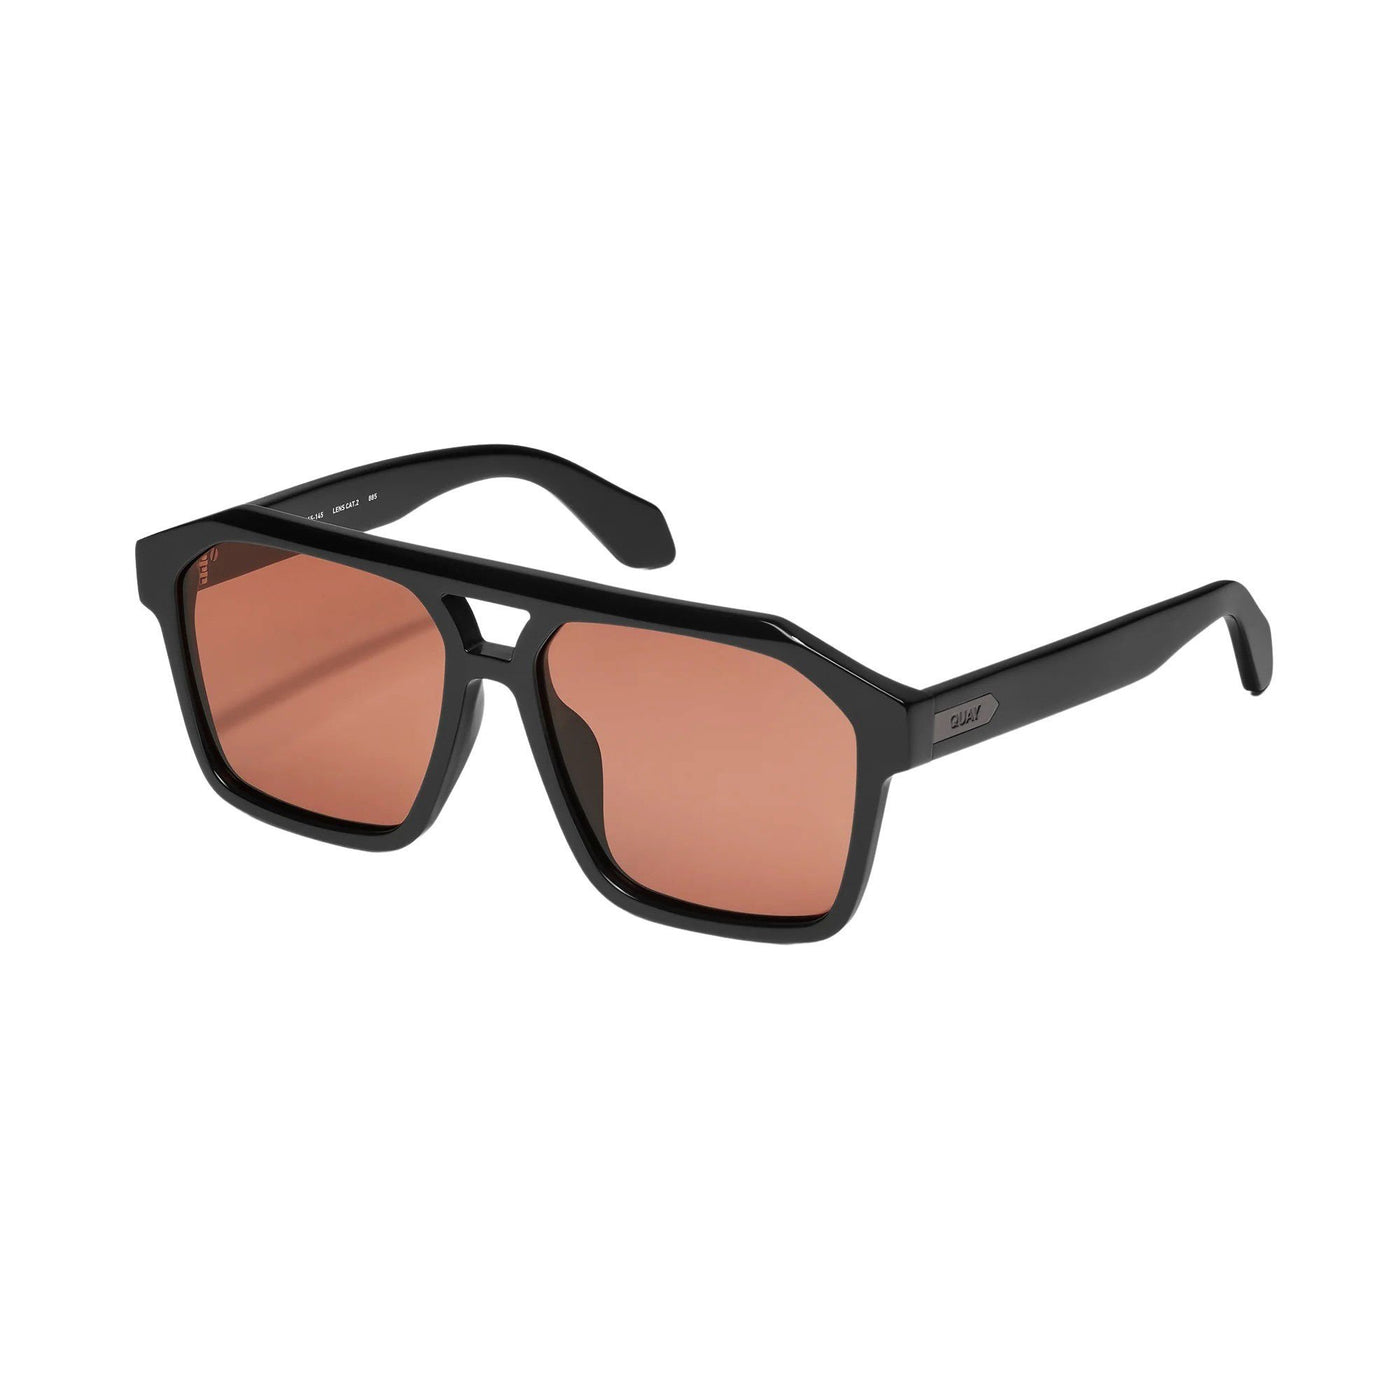 Quay Women's Soundcheck Modern Aviator Sunglasses (Black Frame/Apricot Polarized Lens) - 3/4 View